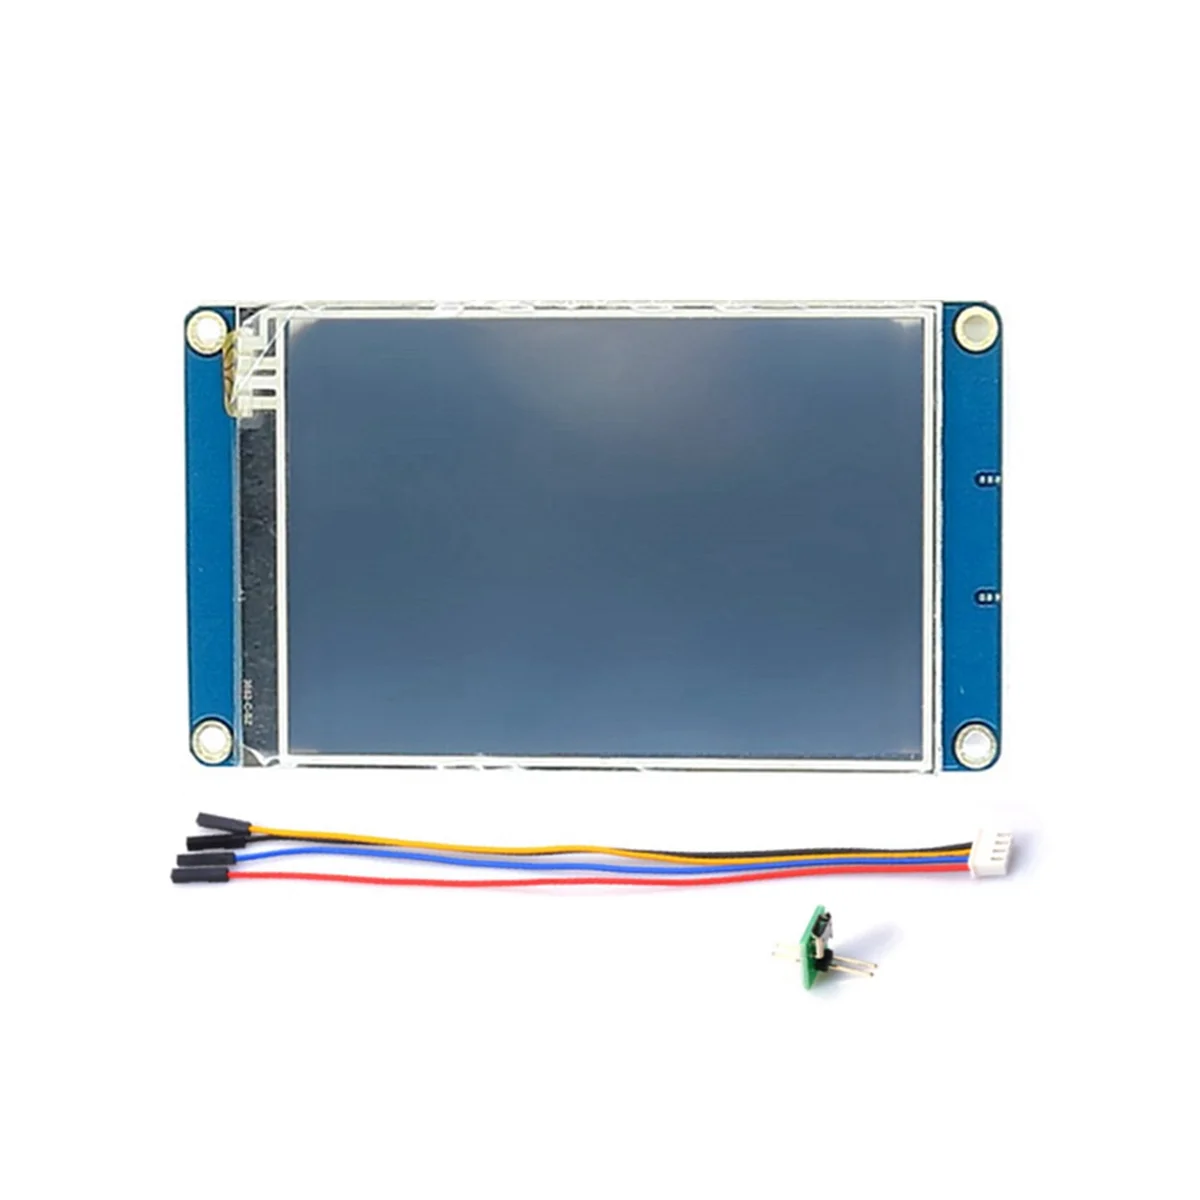 

HMI LCD Touch Display NX4832T035 3.5-Inch Human-Machine Interface HMI Resistive Display Enhanced Series